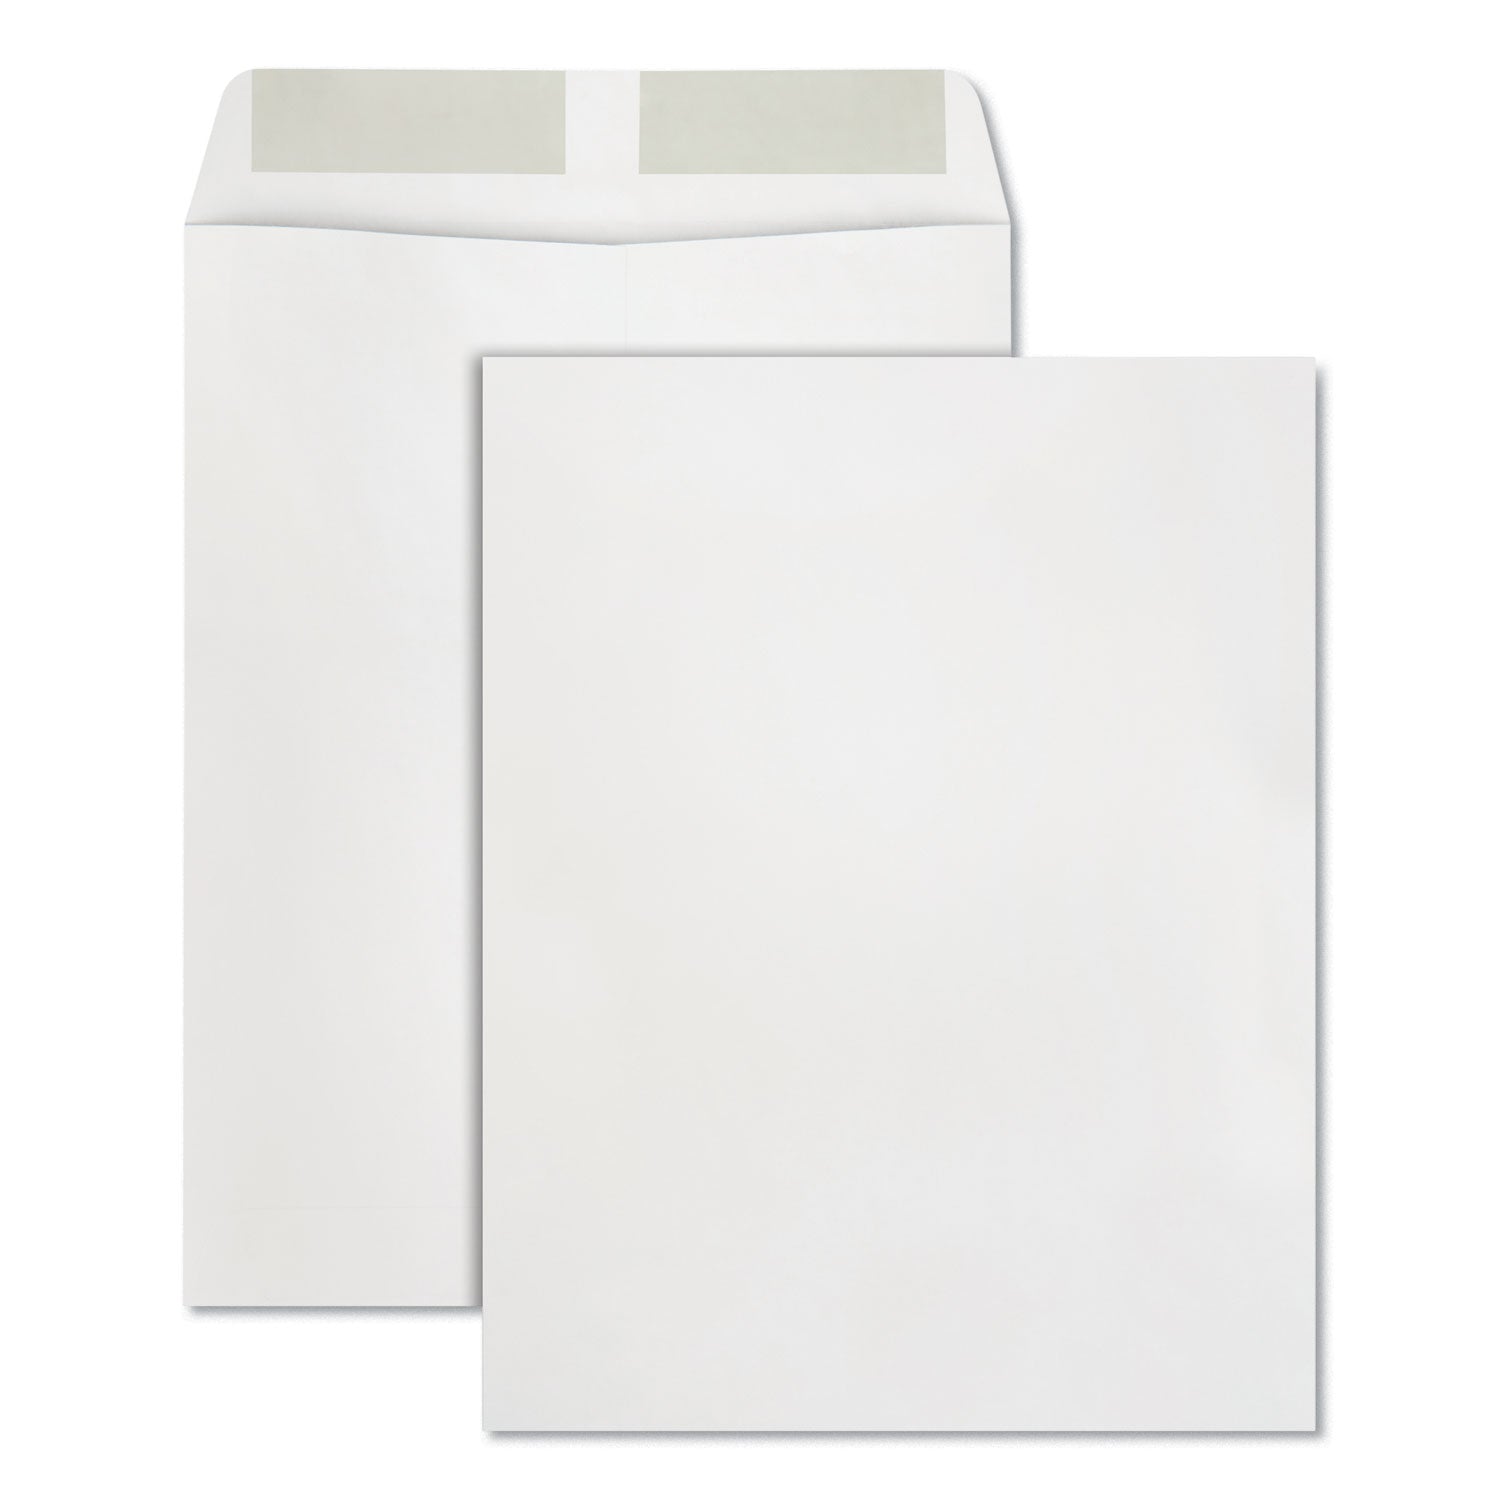 Catalog Envelope, 24 lb Bond Weight Paper, #13 1/2, Square Flap, Gummed Closure, 10 x 13, White, 250/Box - 